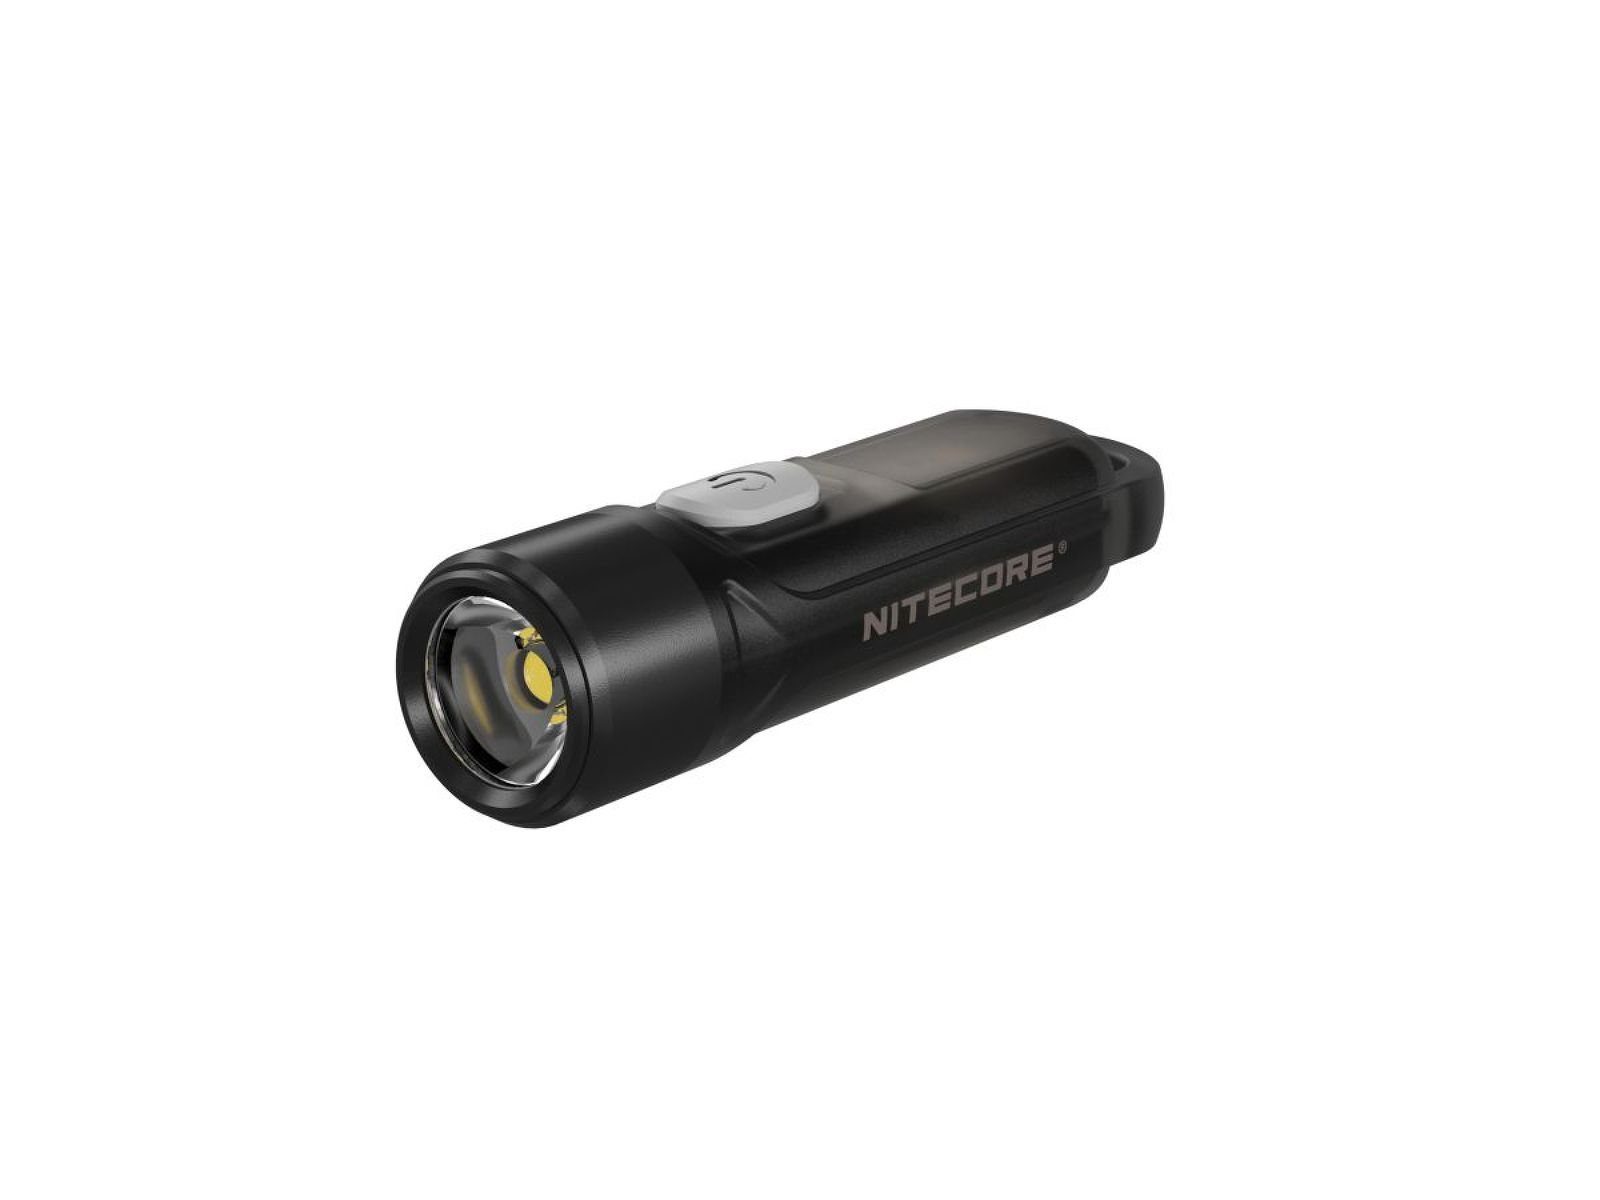 Nitecore LE LED Taschenlampe - Port 300 TIKI USB-C Lumen